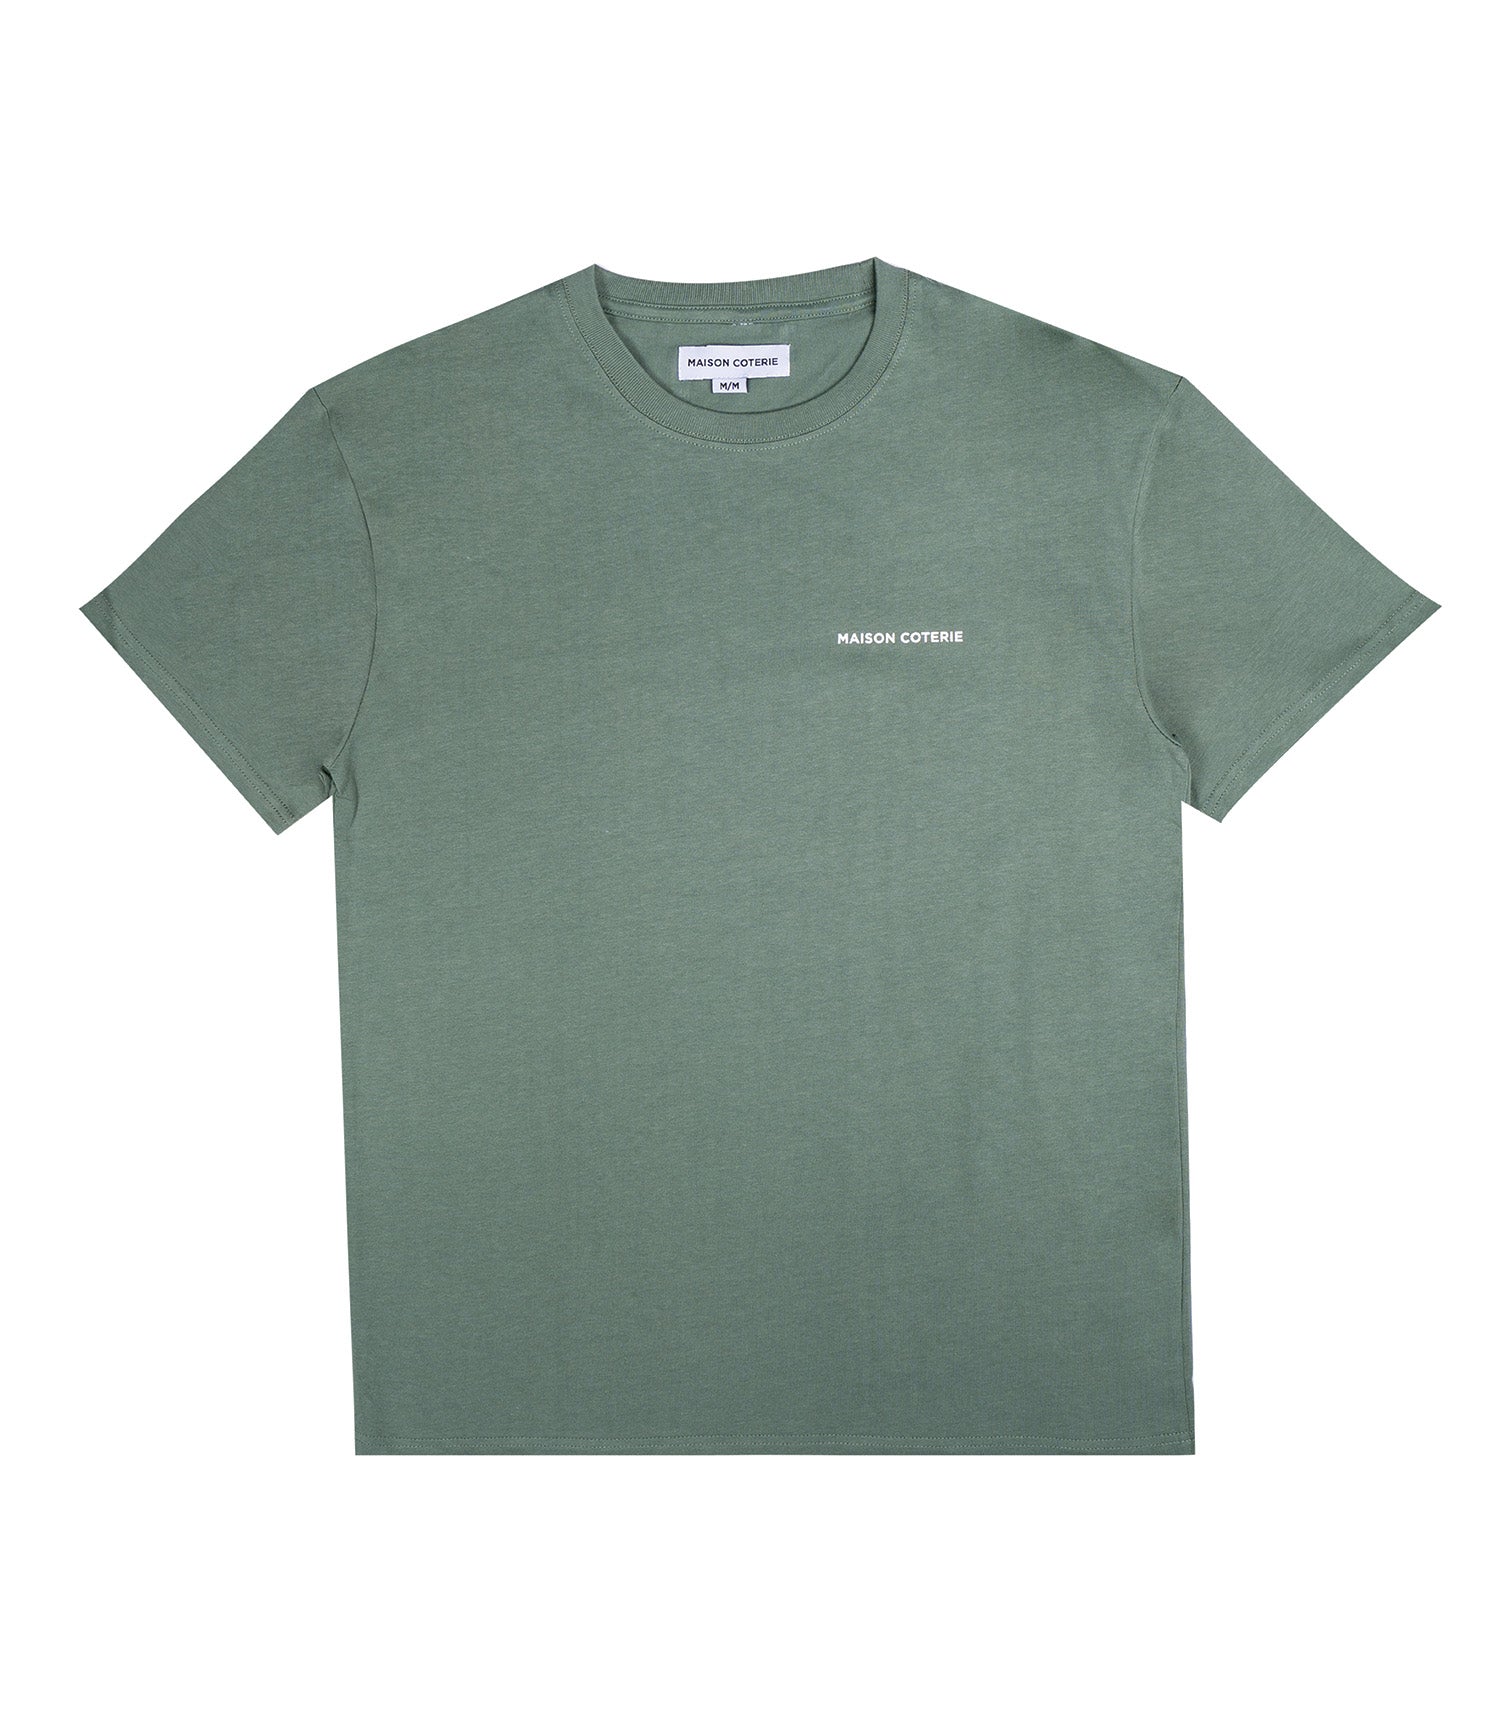 Yanni - Midweight Core Logo T-Shirt - Green